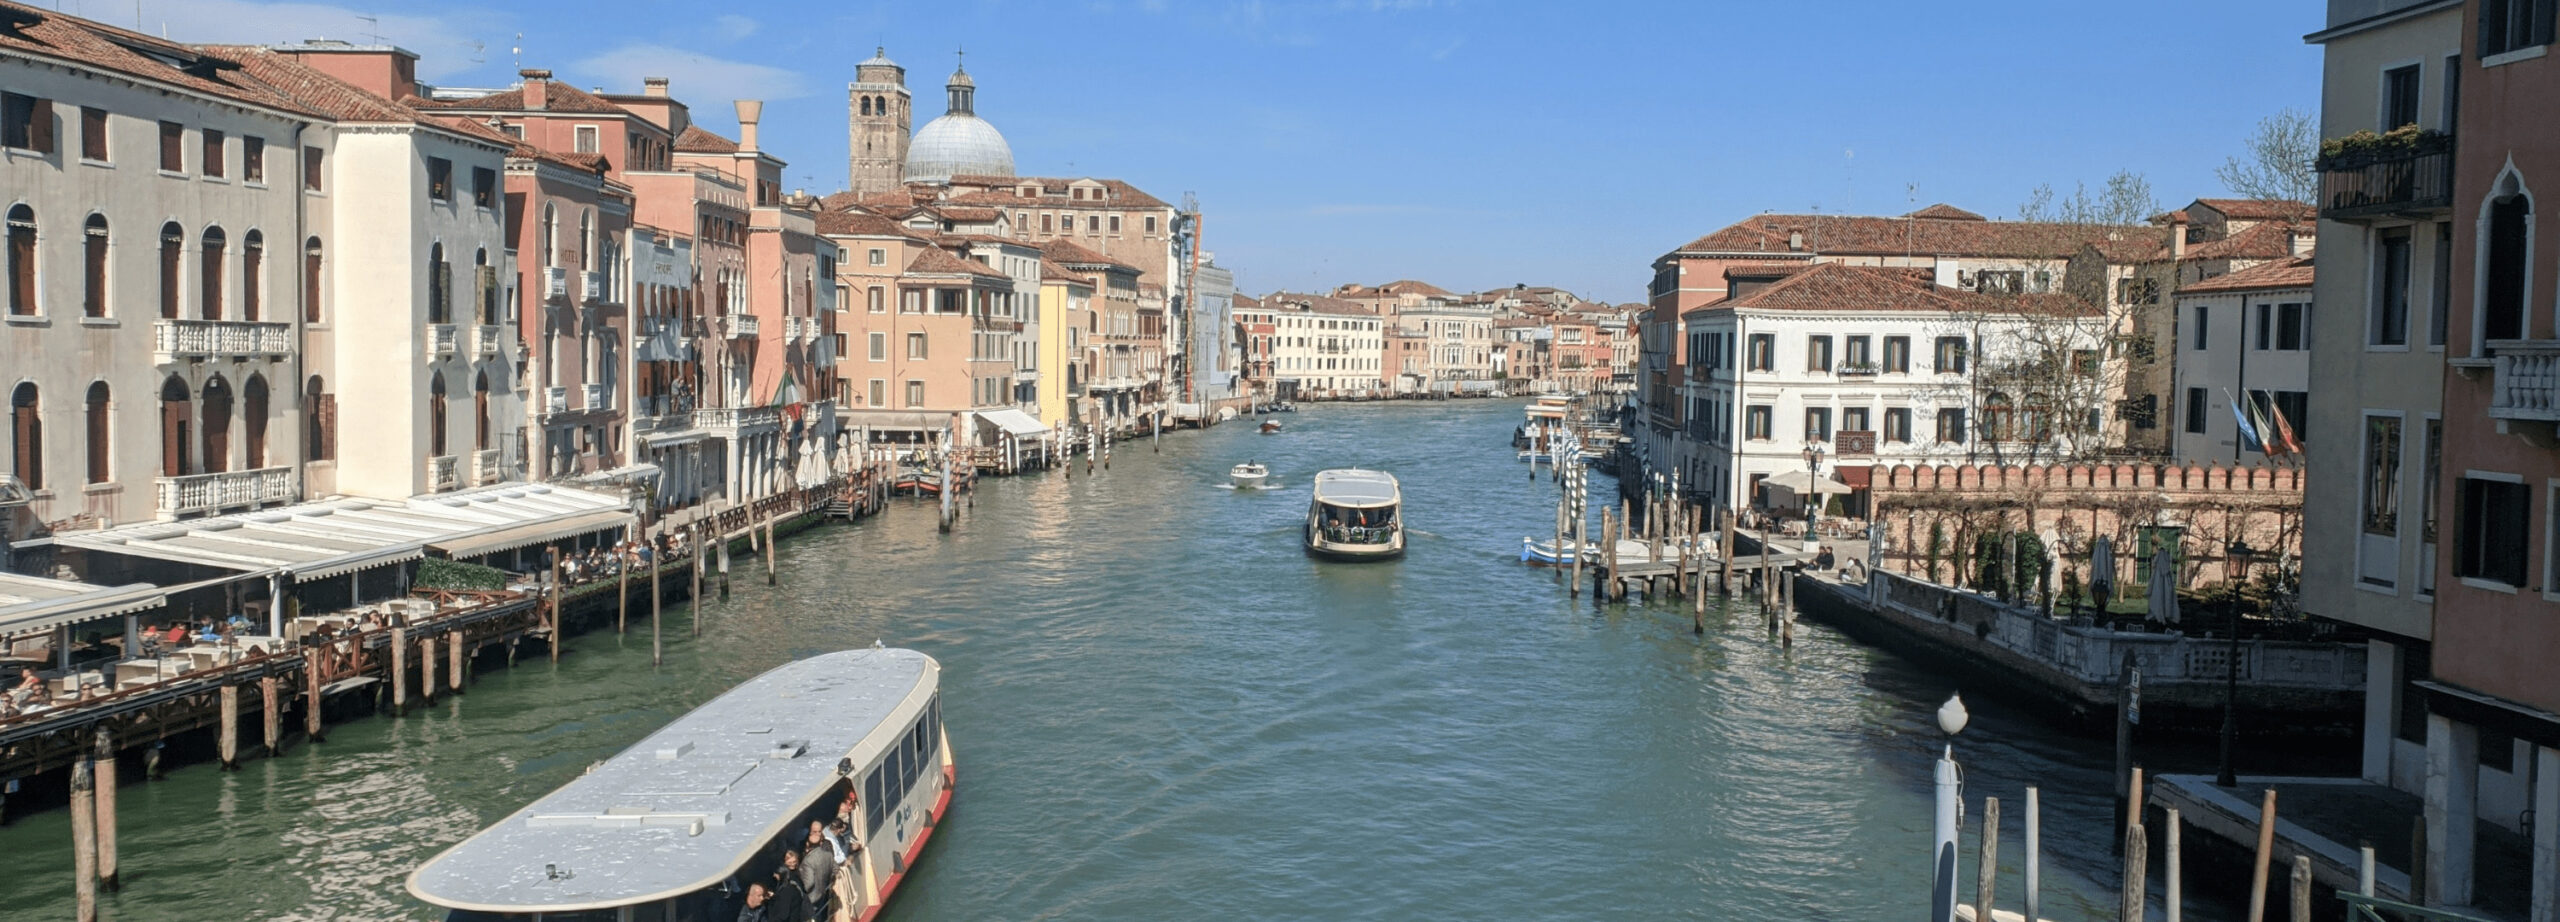 Taxa para visitar Veneza